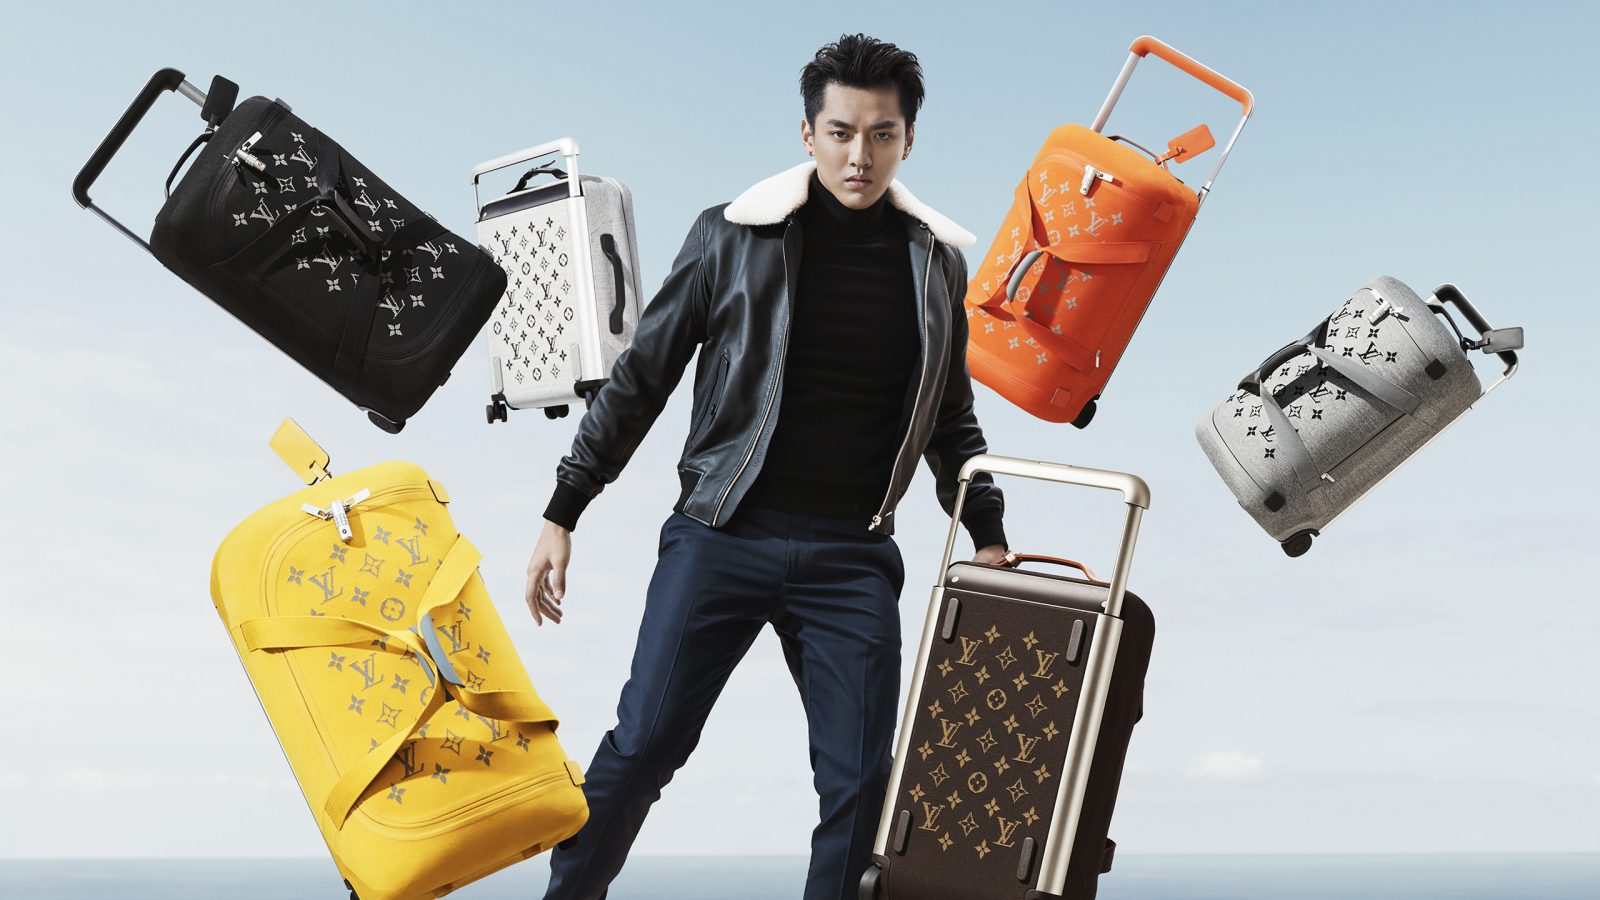 Louis Vuitton Luggage Fashion Girls Love